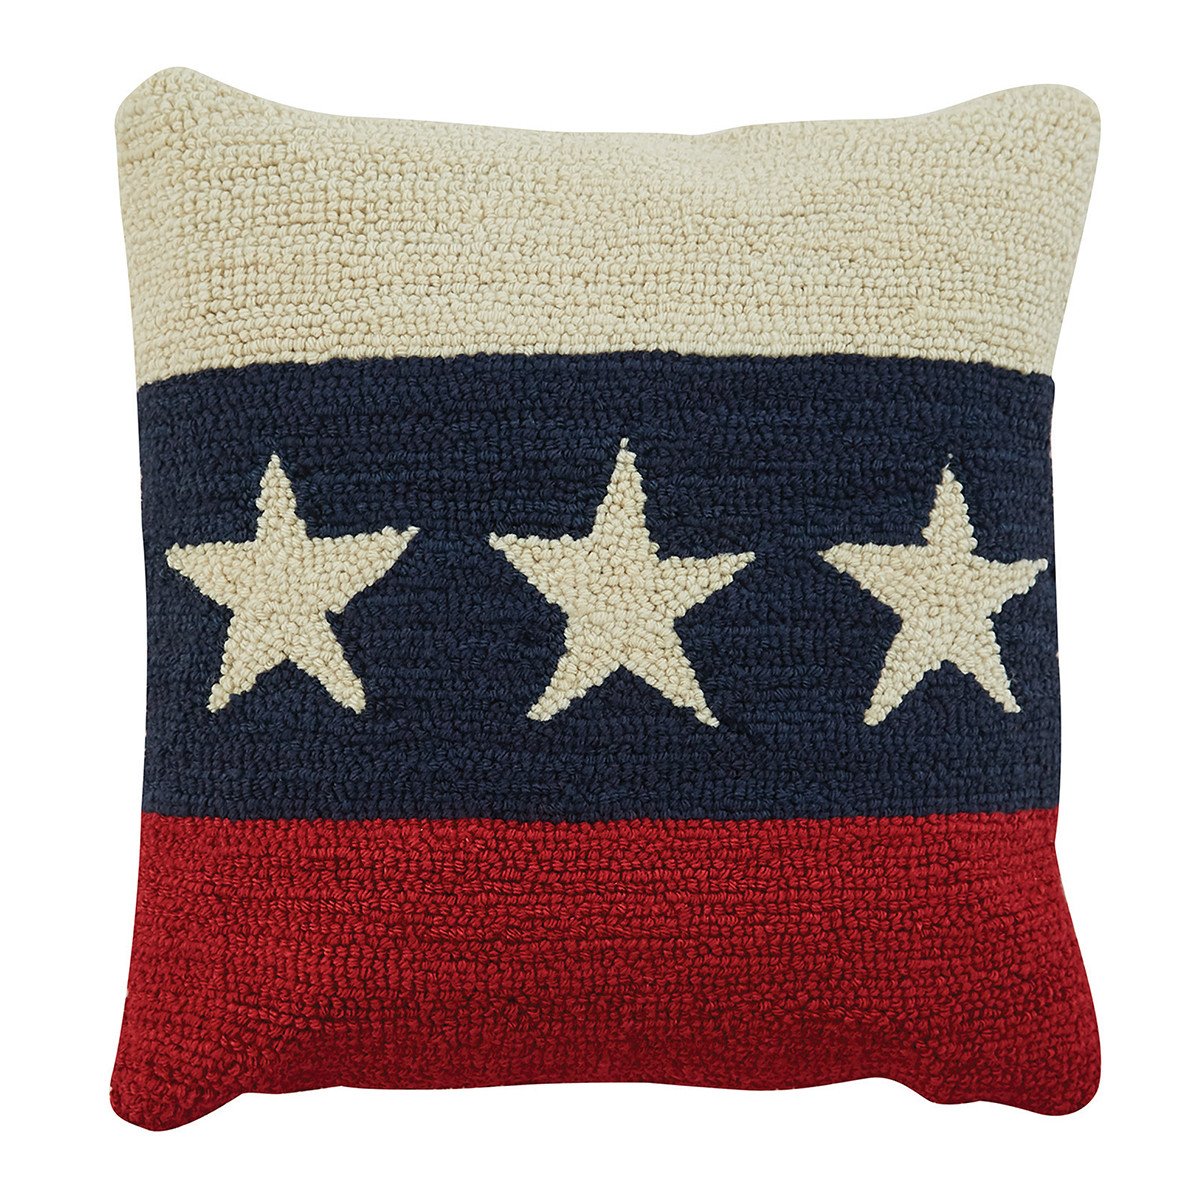 Americana Star Pillow - 18x18 - Park Designs